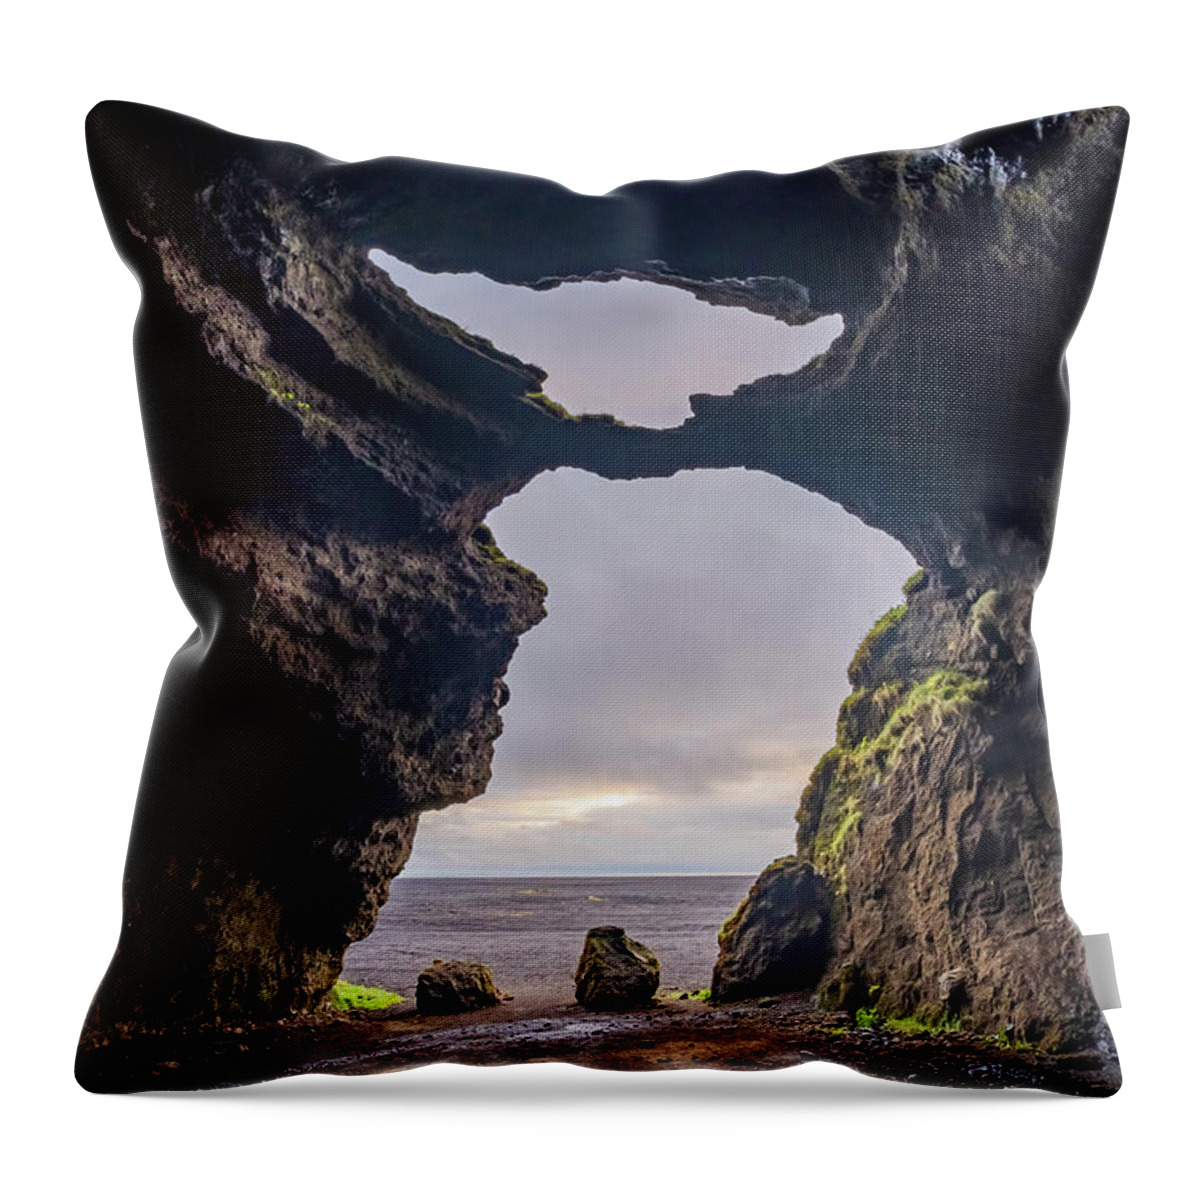 Yoda Throw Pillow featuring the photograph Inside Yoda Cave in Iceland by Alexios Ntounas